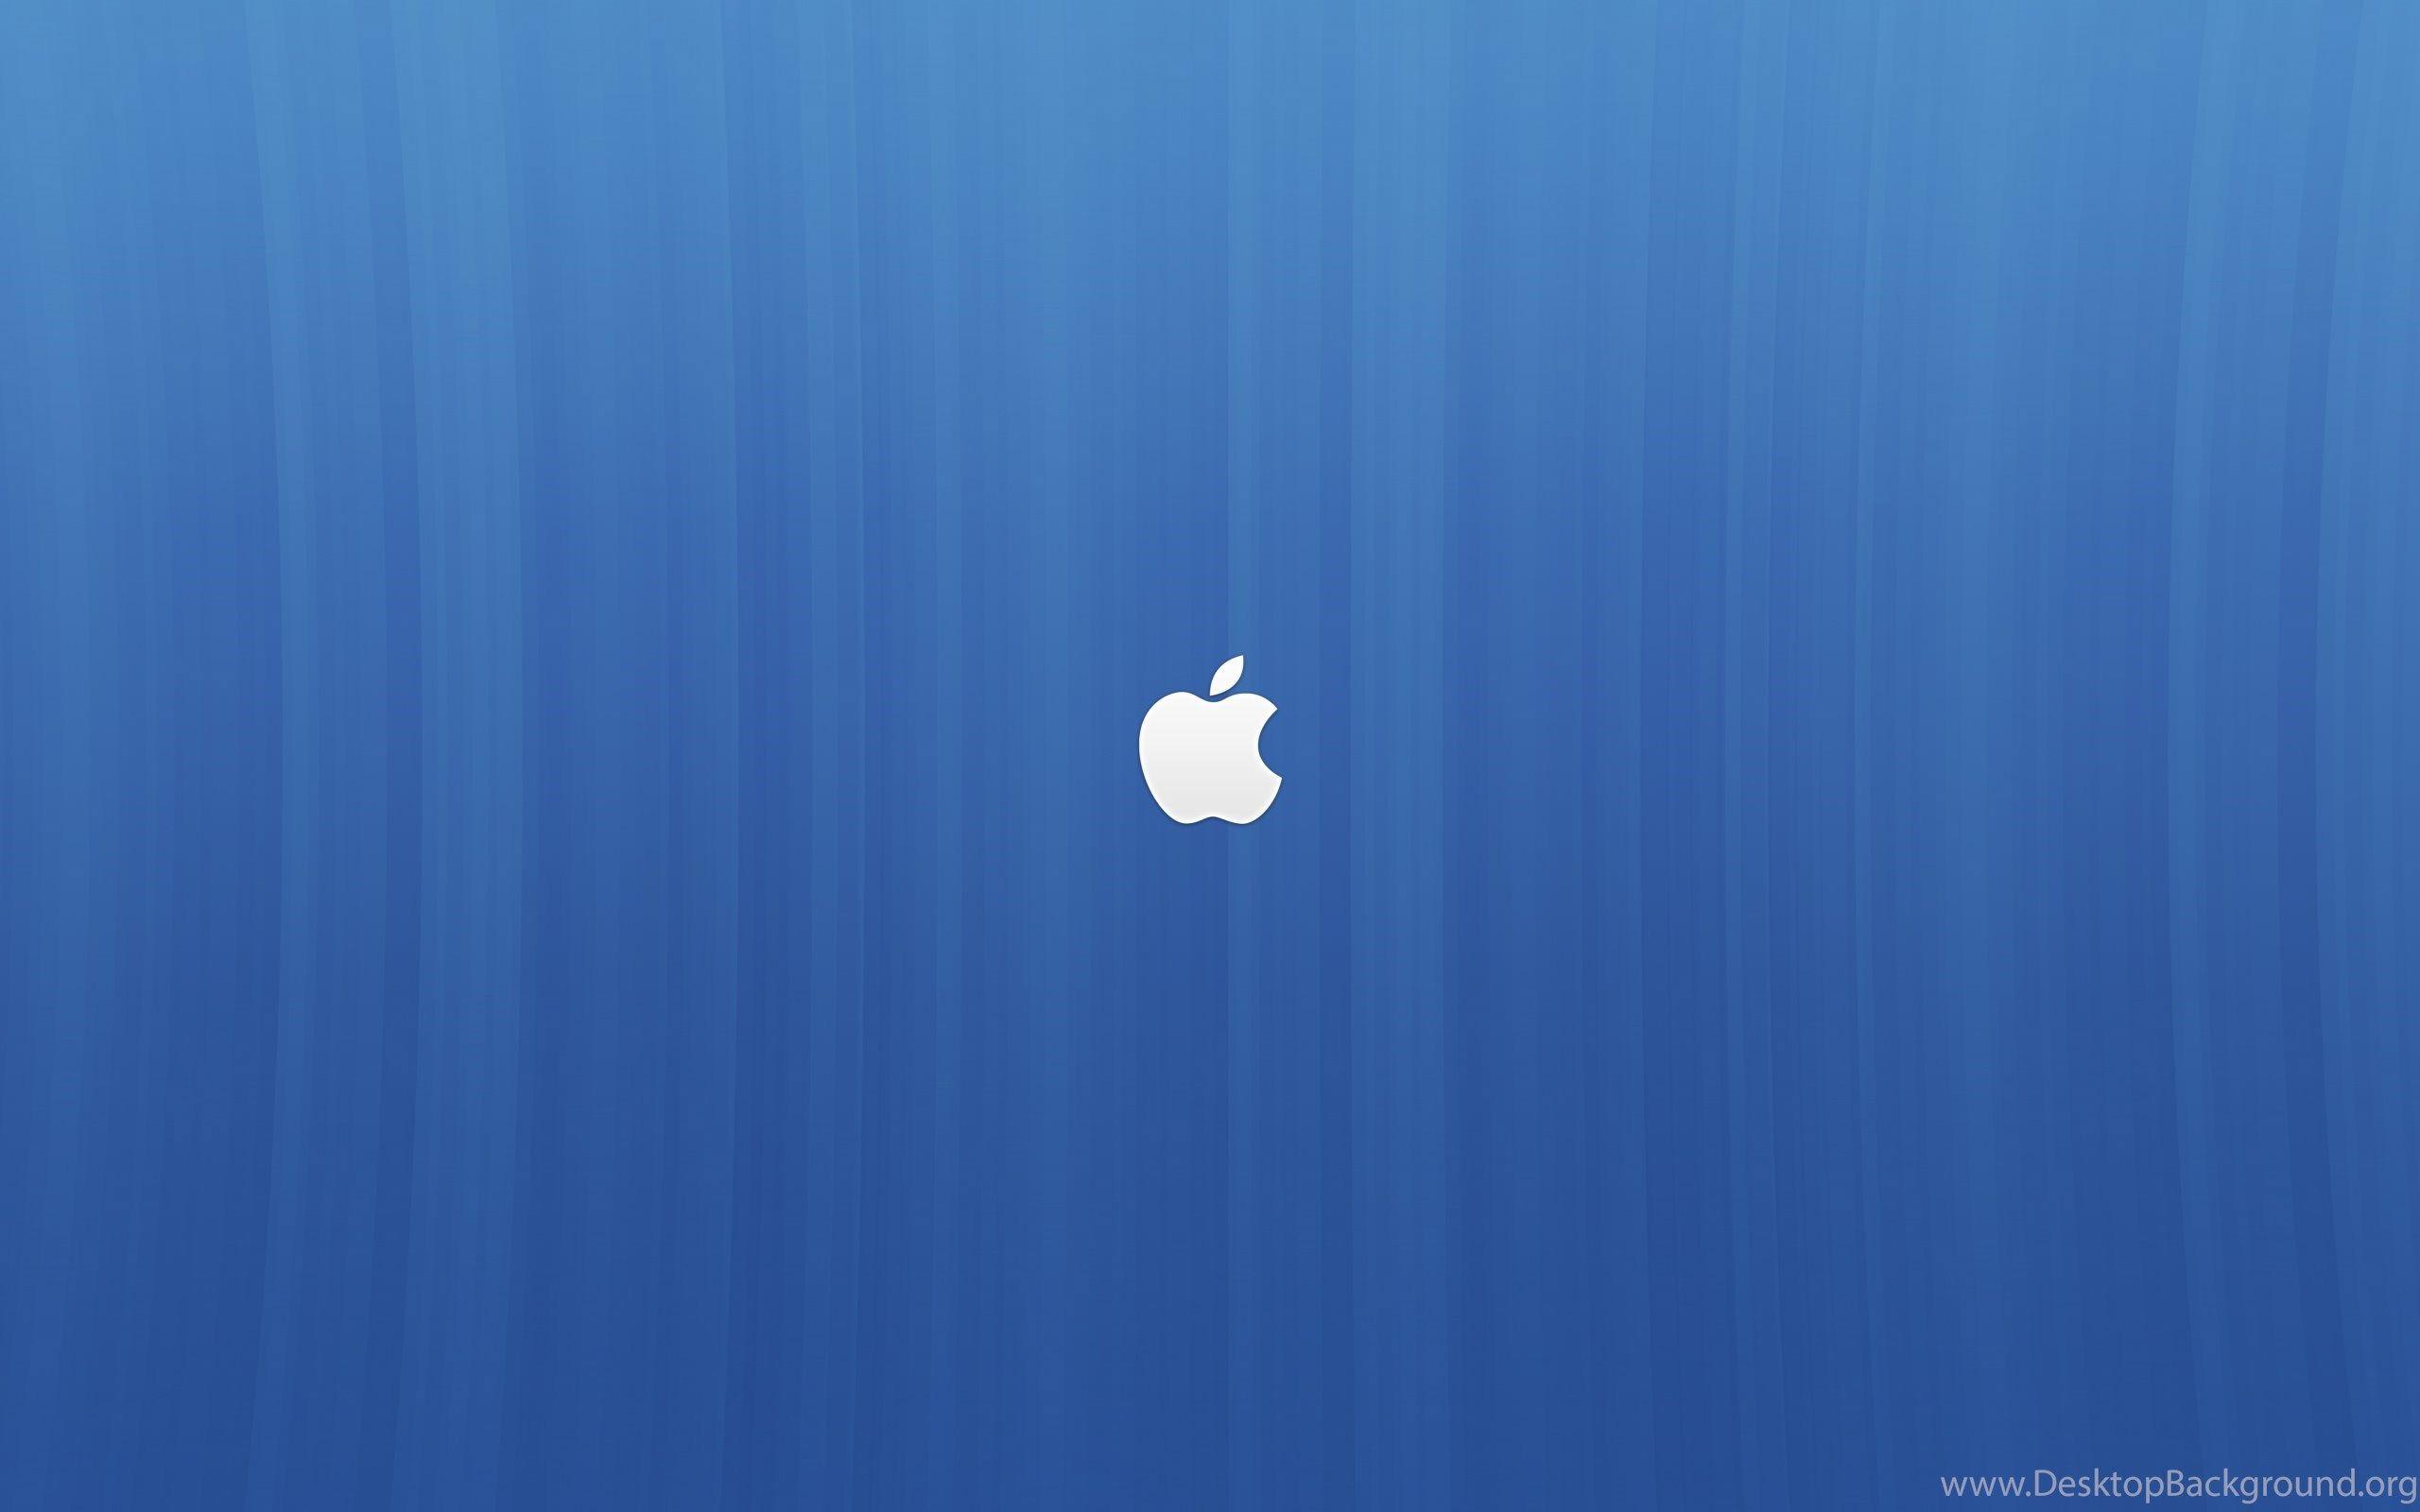 Small Apple Logo - Small Apple Logo Blue Background Wallpaper Desktop Background